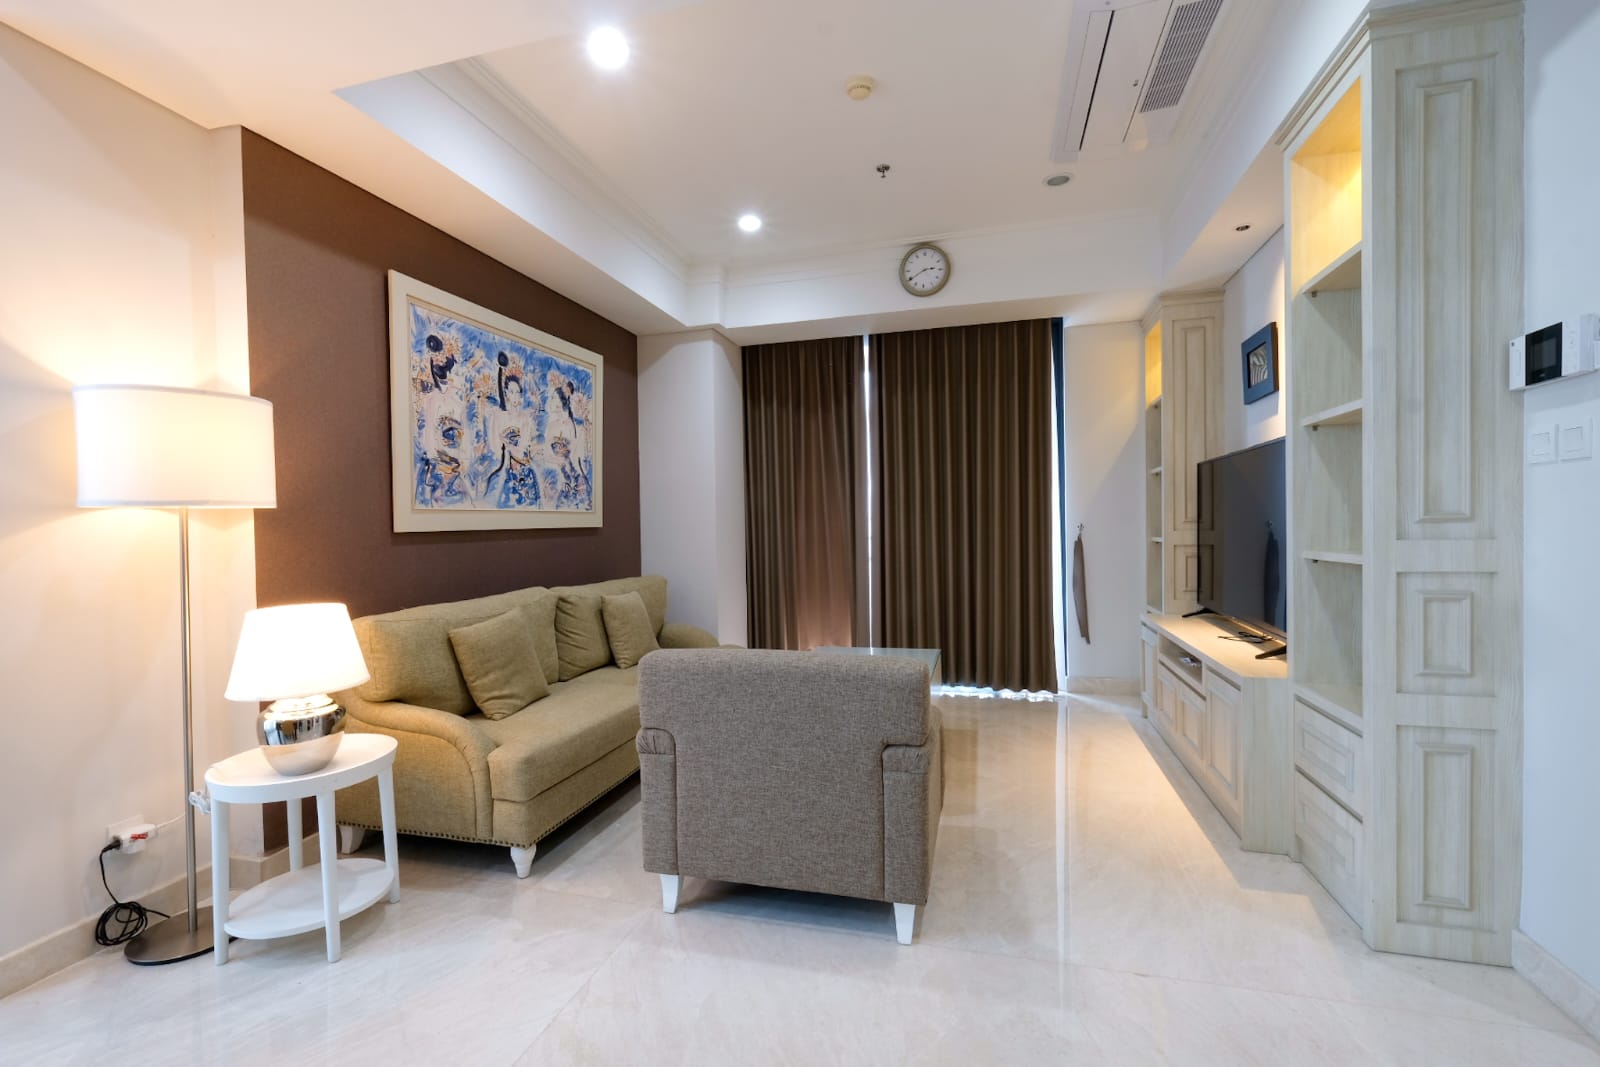 Sewa Apartemen Private Lift Casagrande Residence Kokas Tower Chianti Lantai 38 Luas 145 m2 3+1 Bed Room Rp.32 Juta / Bulan 